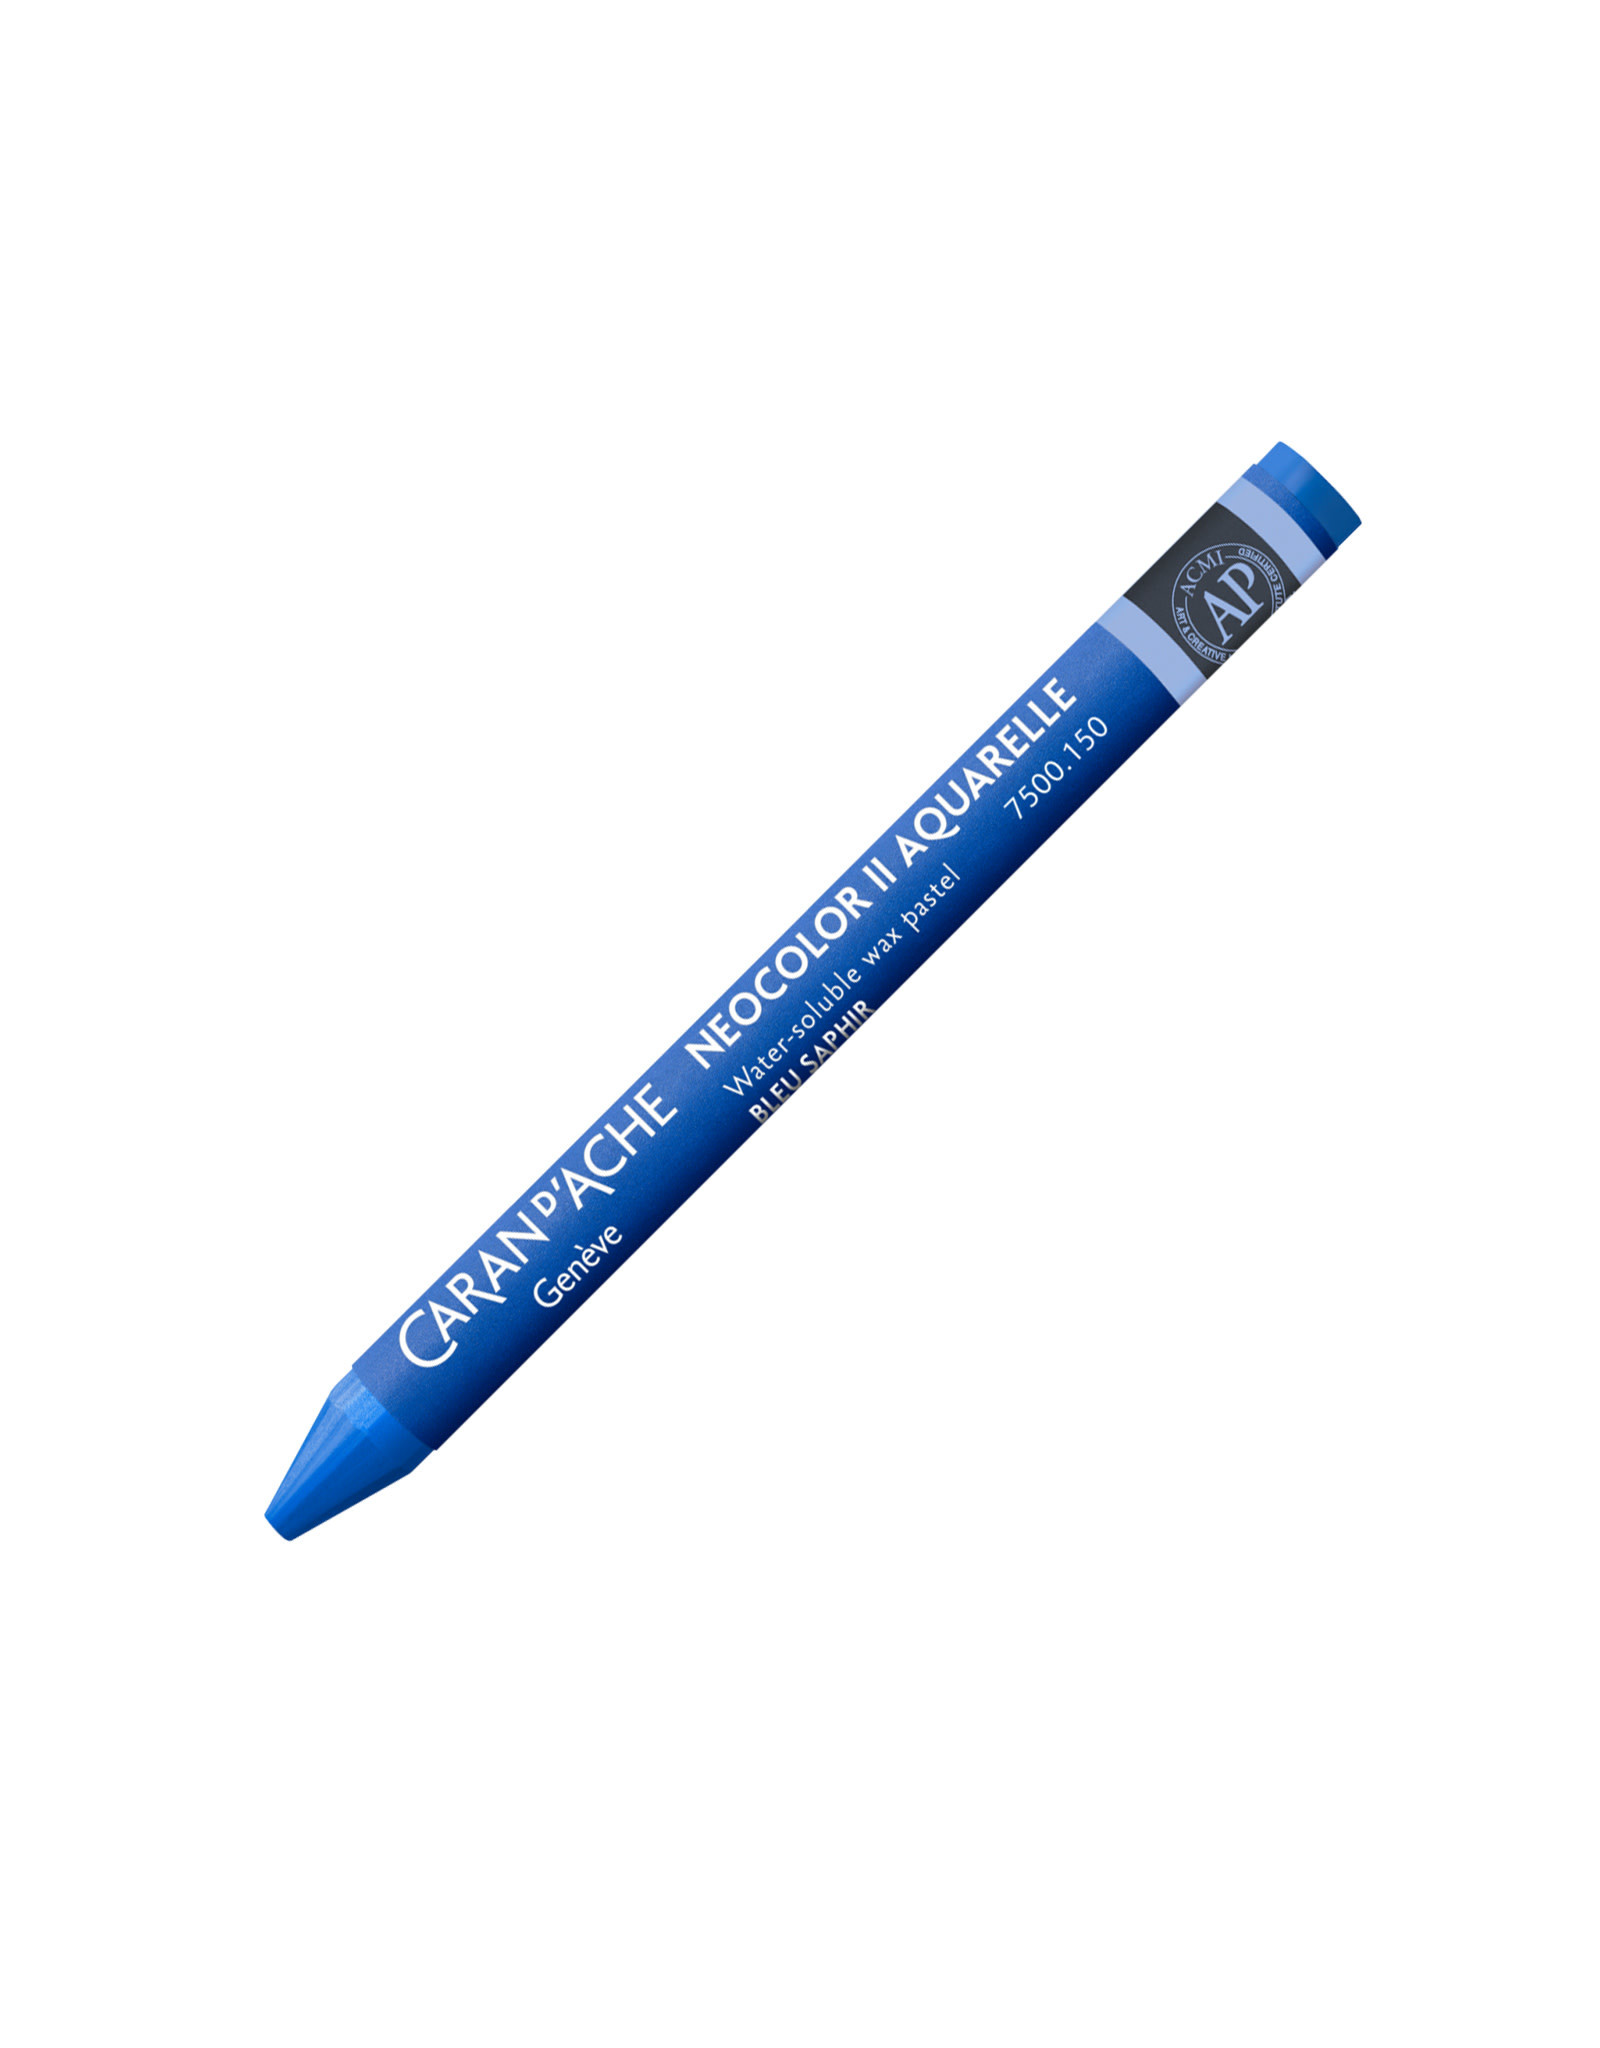 Caran d'Ache Neocolor II Crayons Sapphire Blue